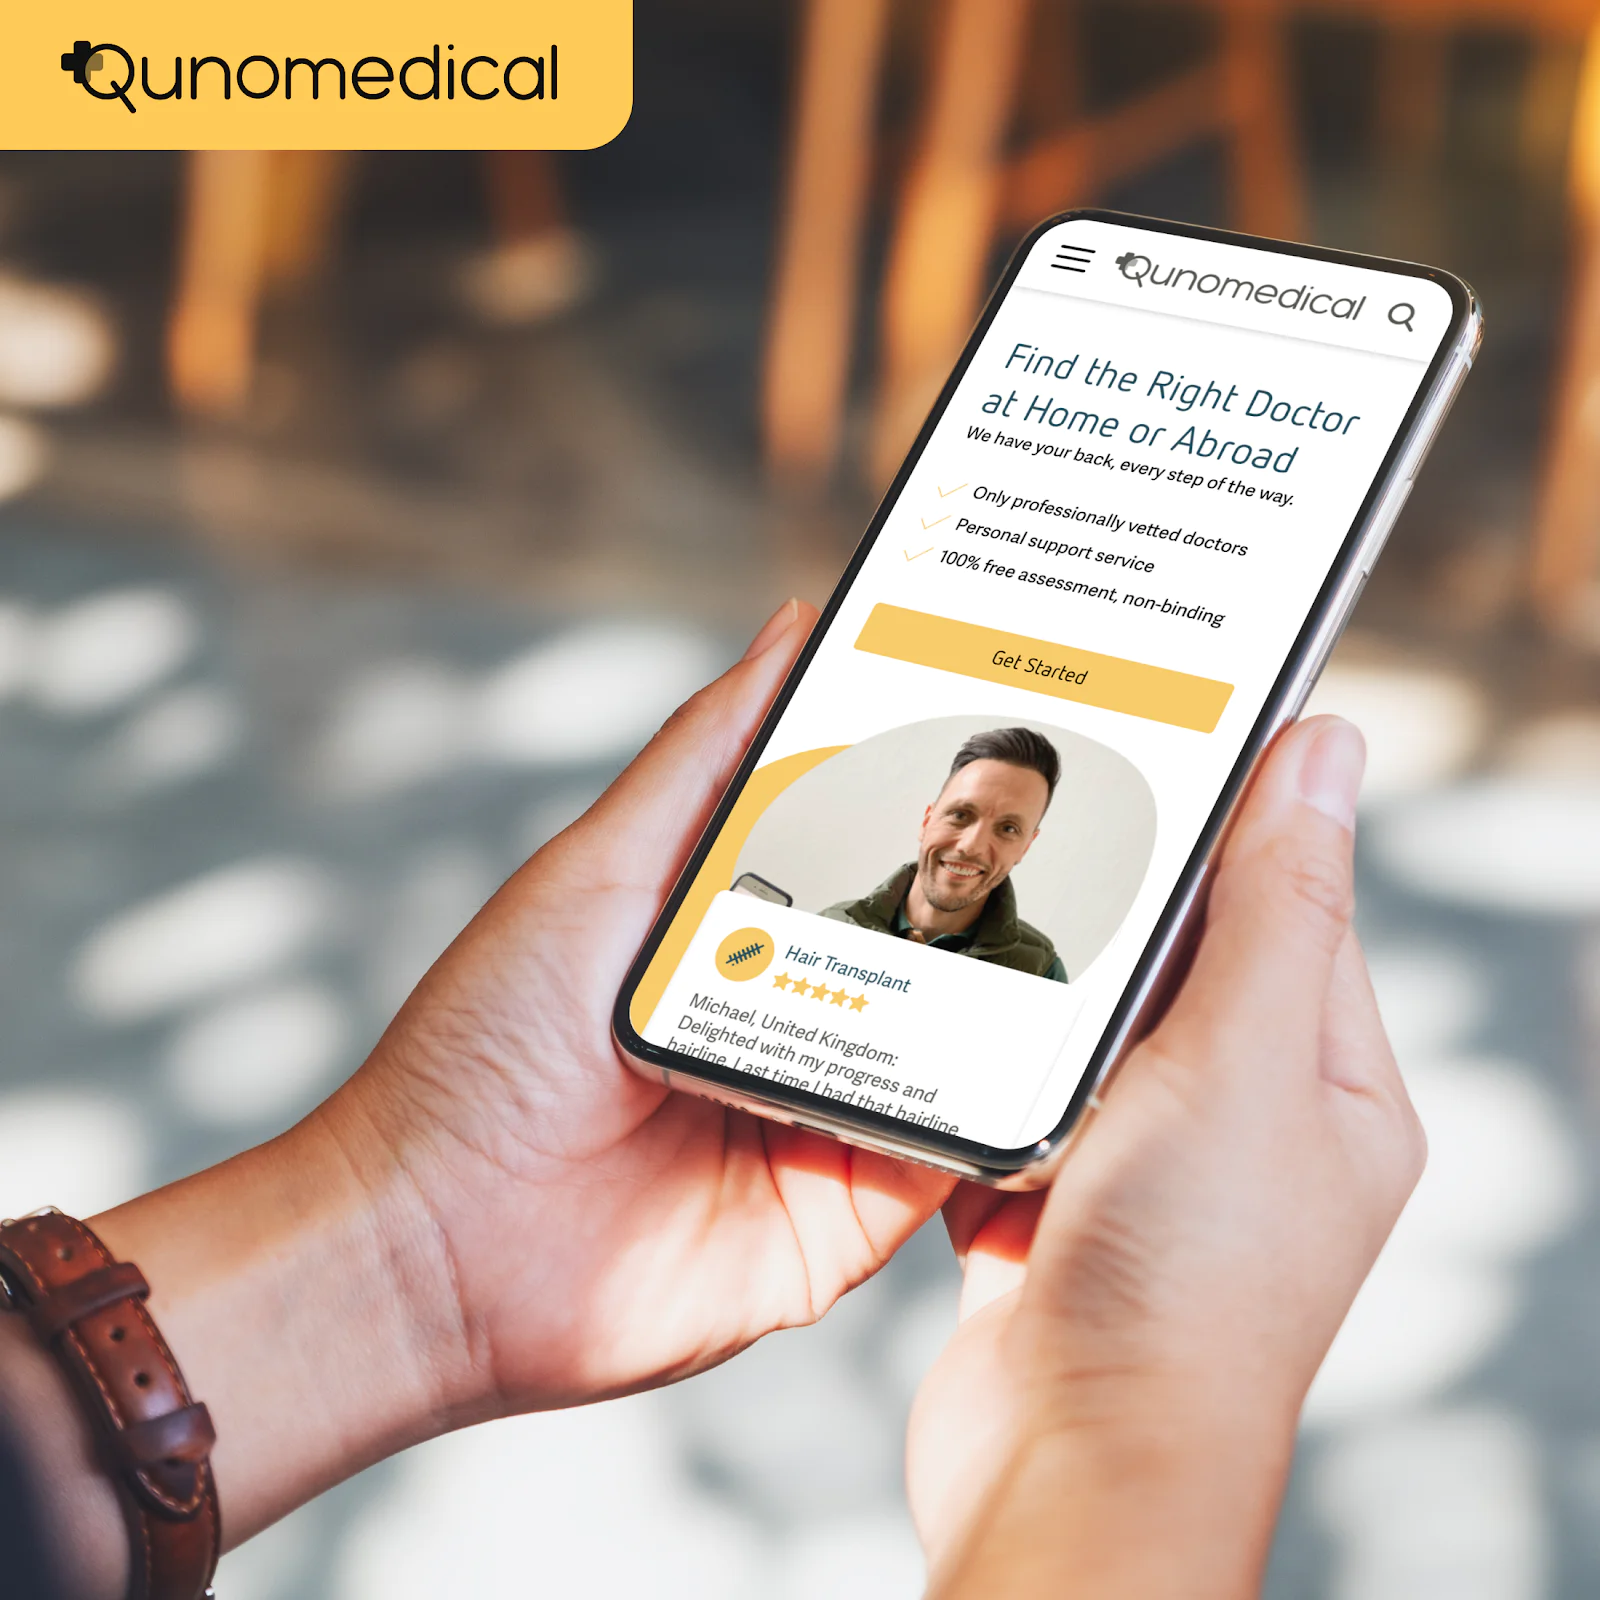 Mobile image of Qunomedical platform